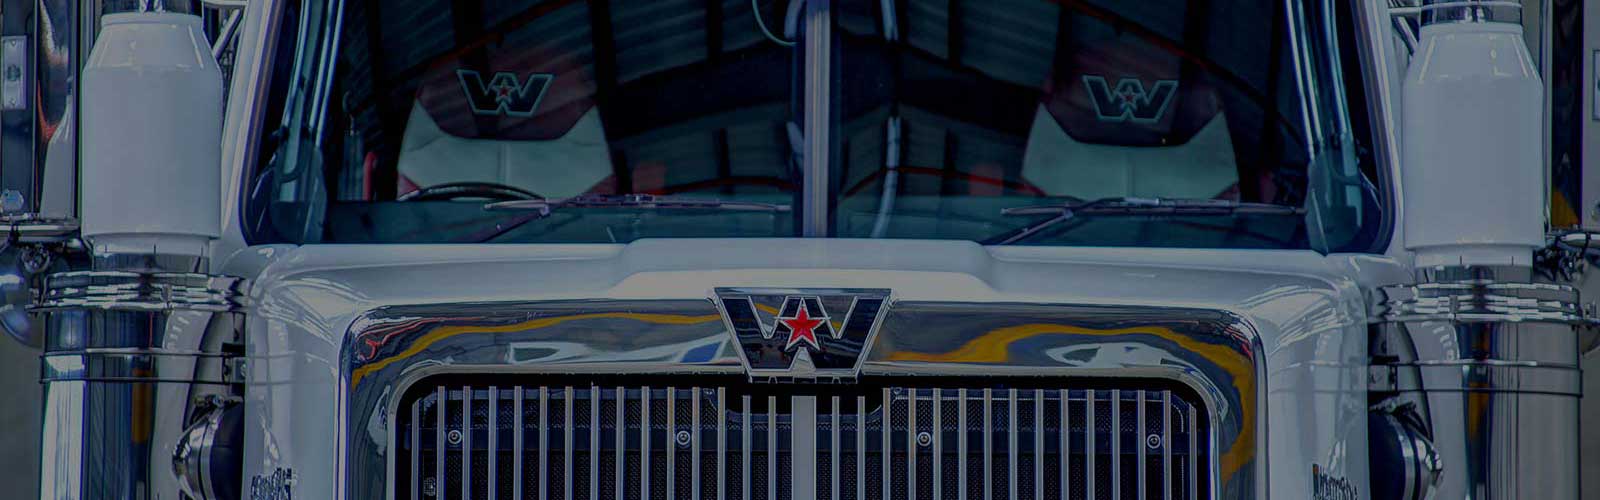 Western Star Car Logo - Western Star Trucks for Sale - Queensland, Australia | Penske Power ...